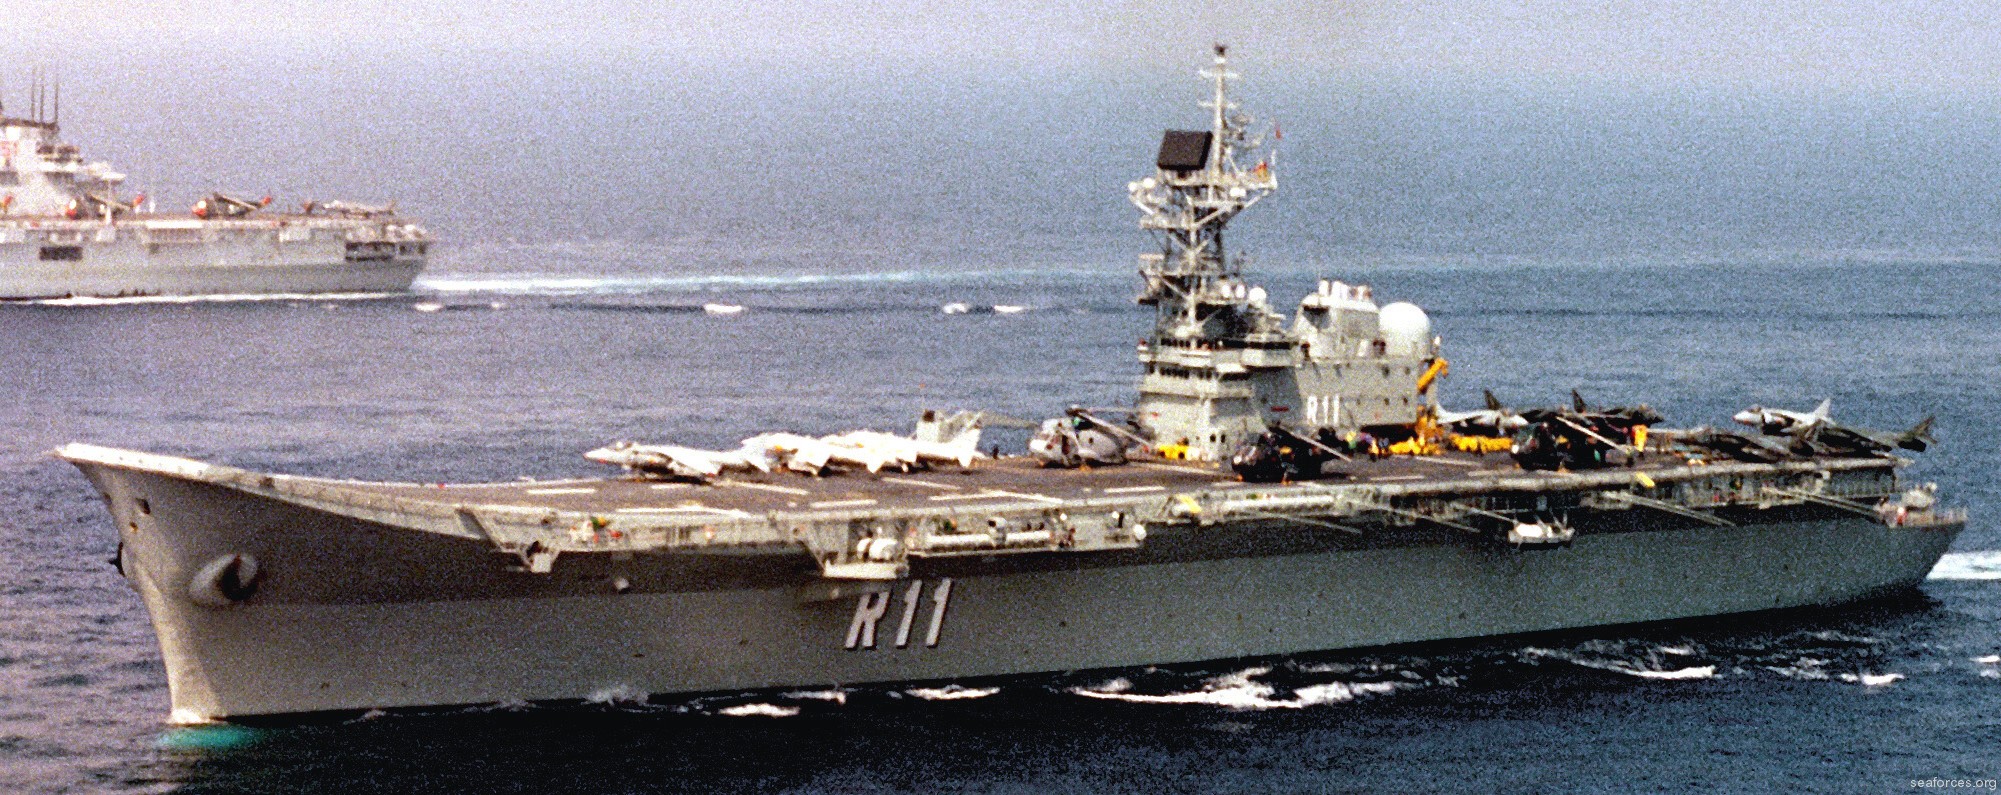 r-11 sps principe de asturias aircraft carrier vstol spanish navy 11